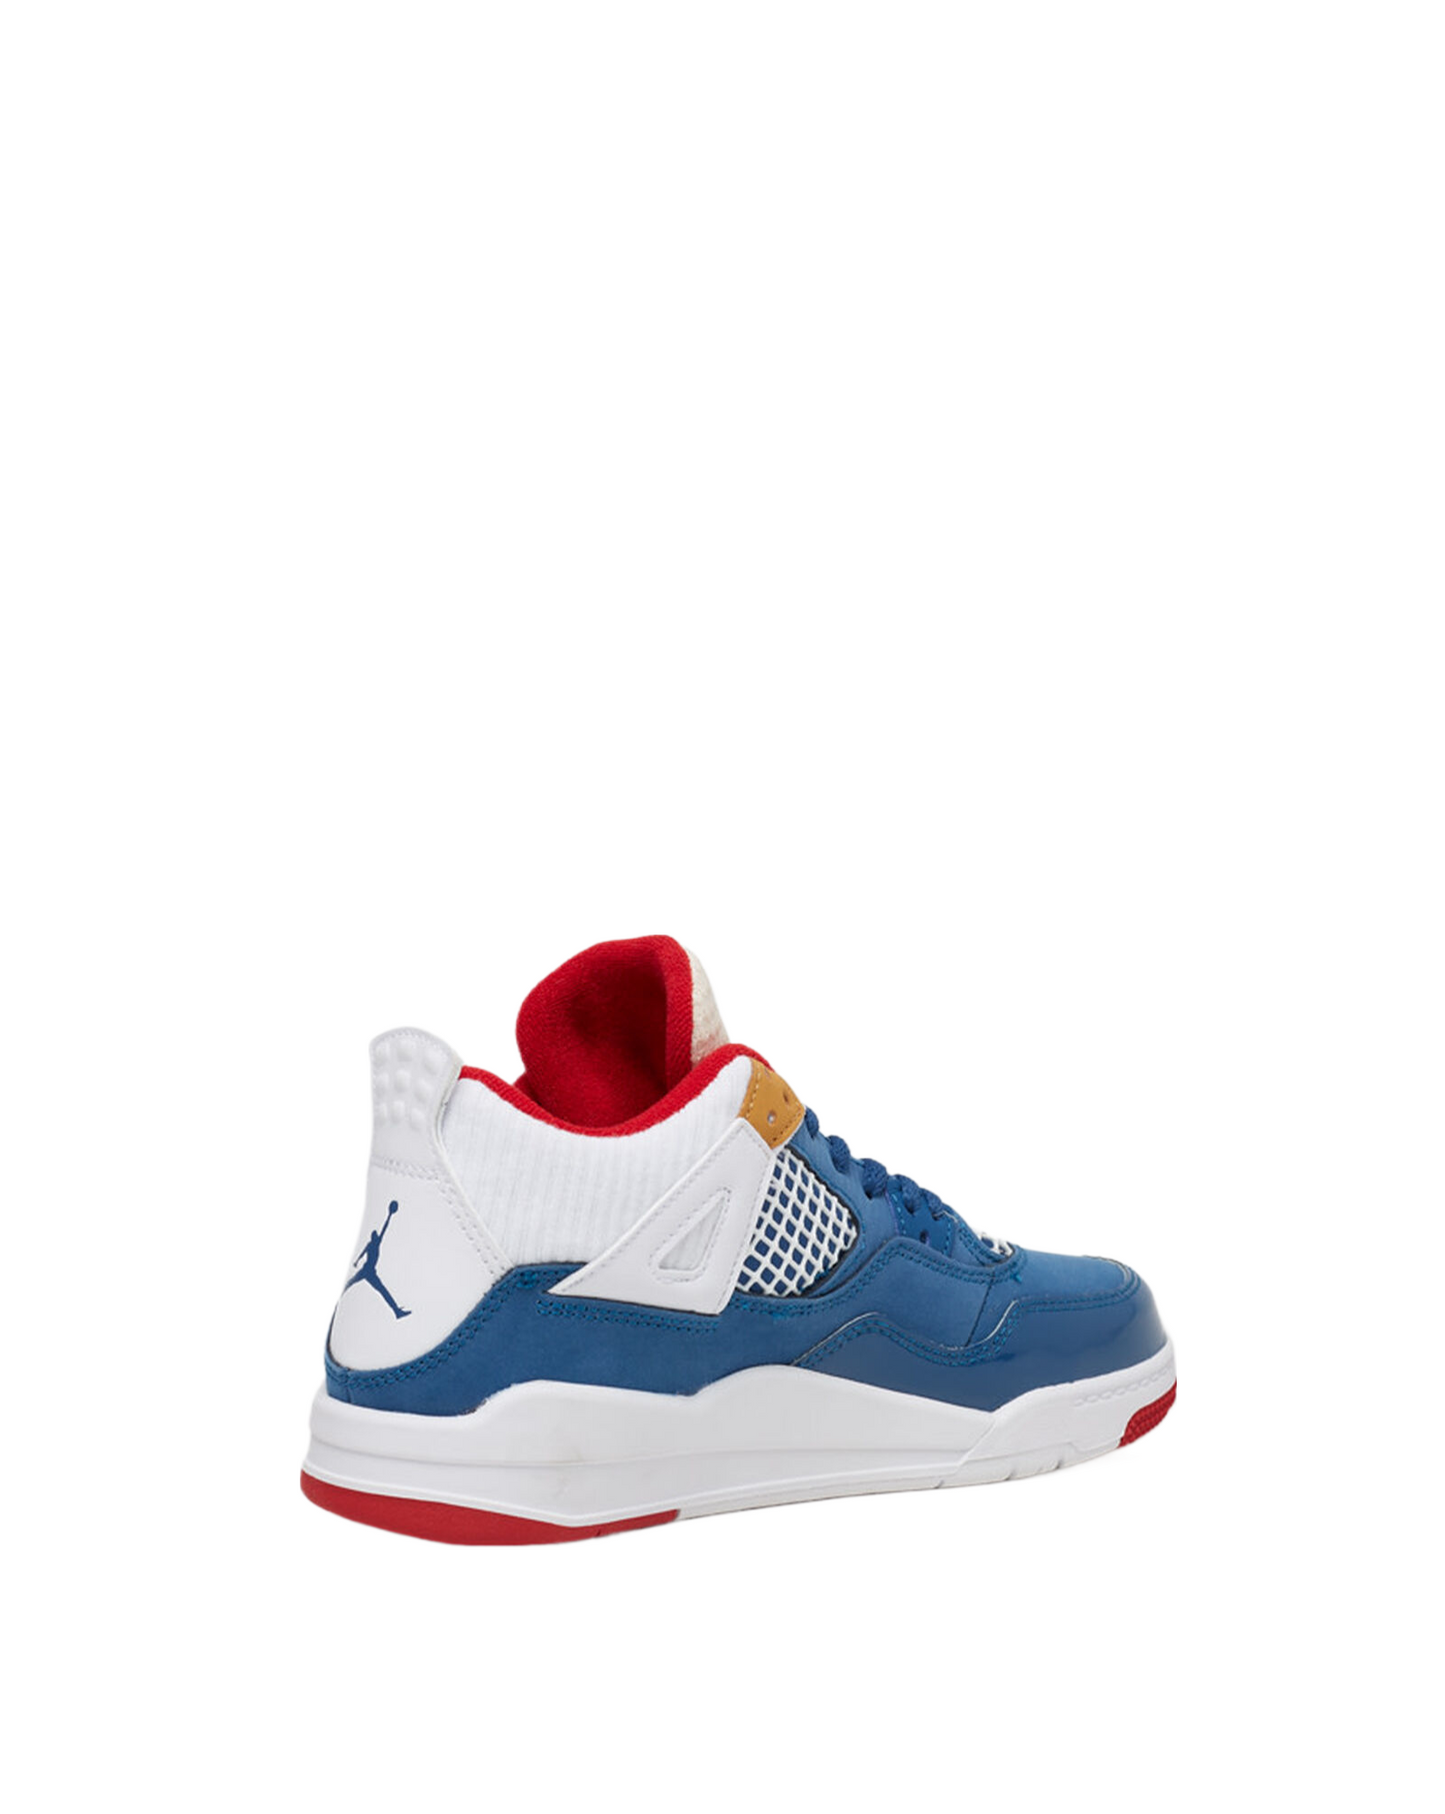 Jordan 4 Retro Preschool Sneaker French Blue / White-Gym Red DR6953-400